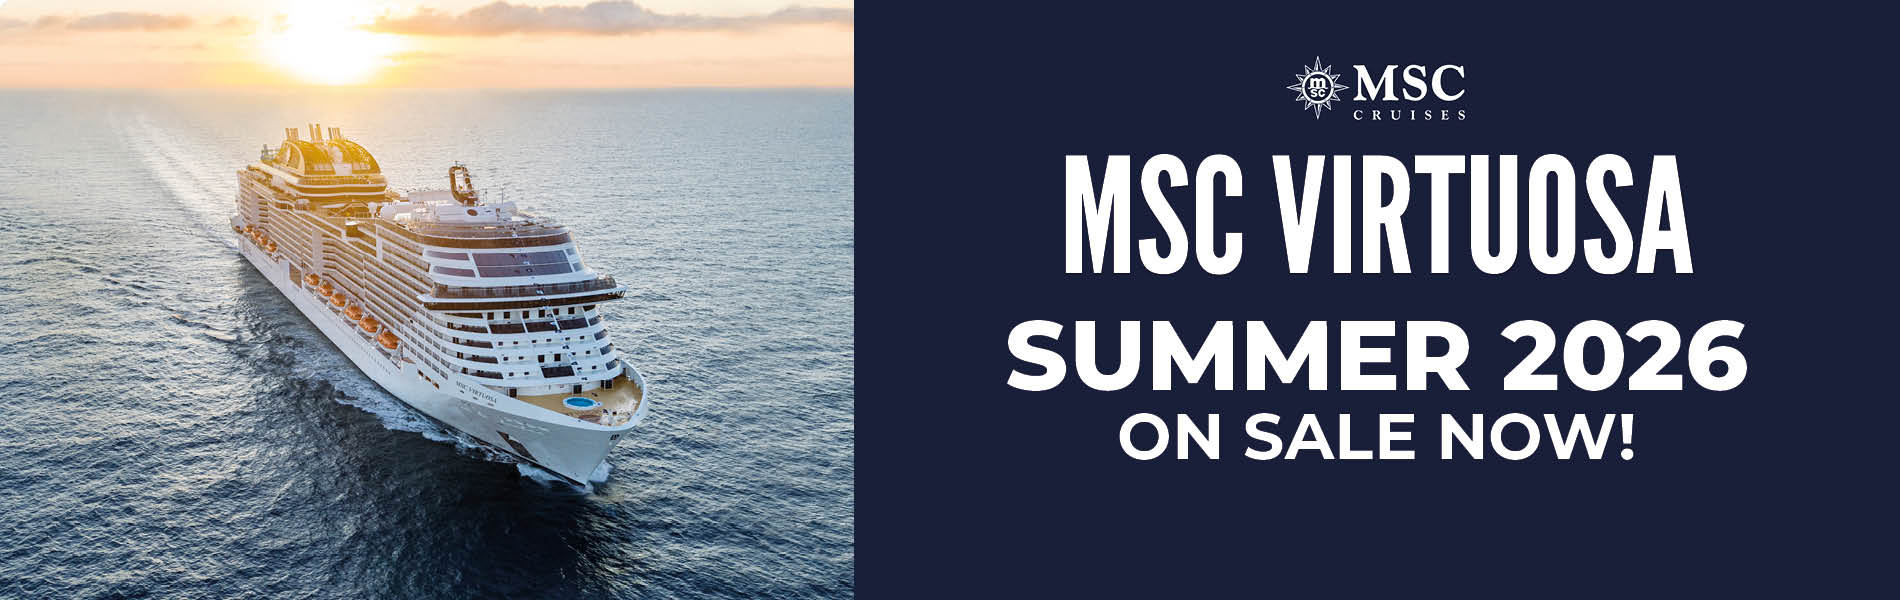 MSC Cruises Campaign